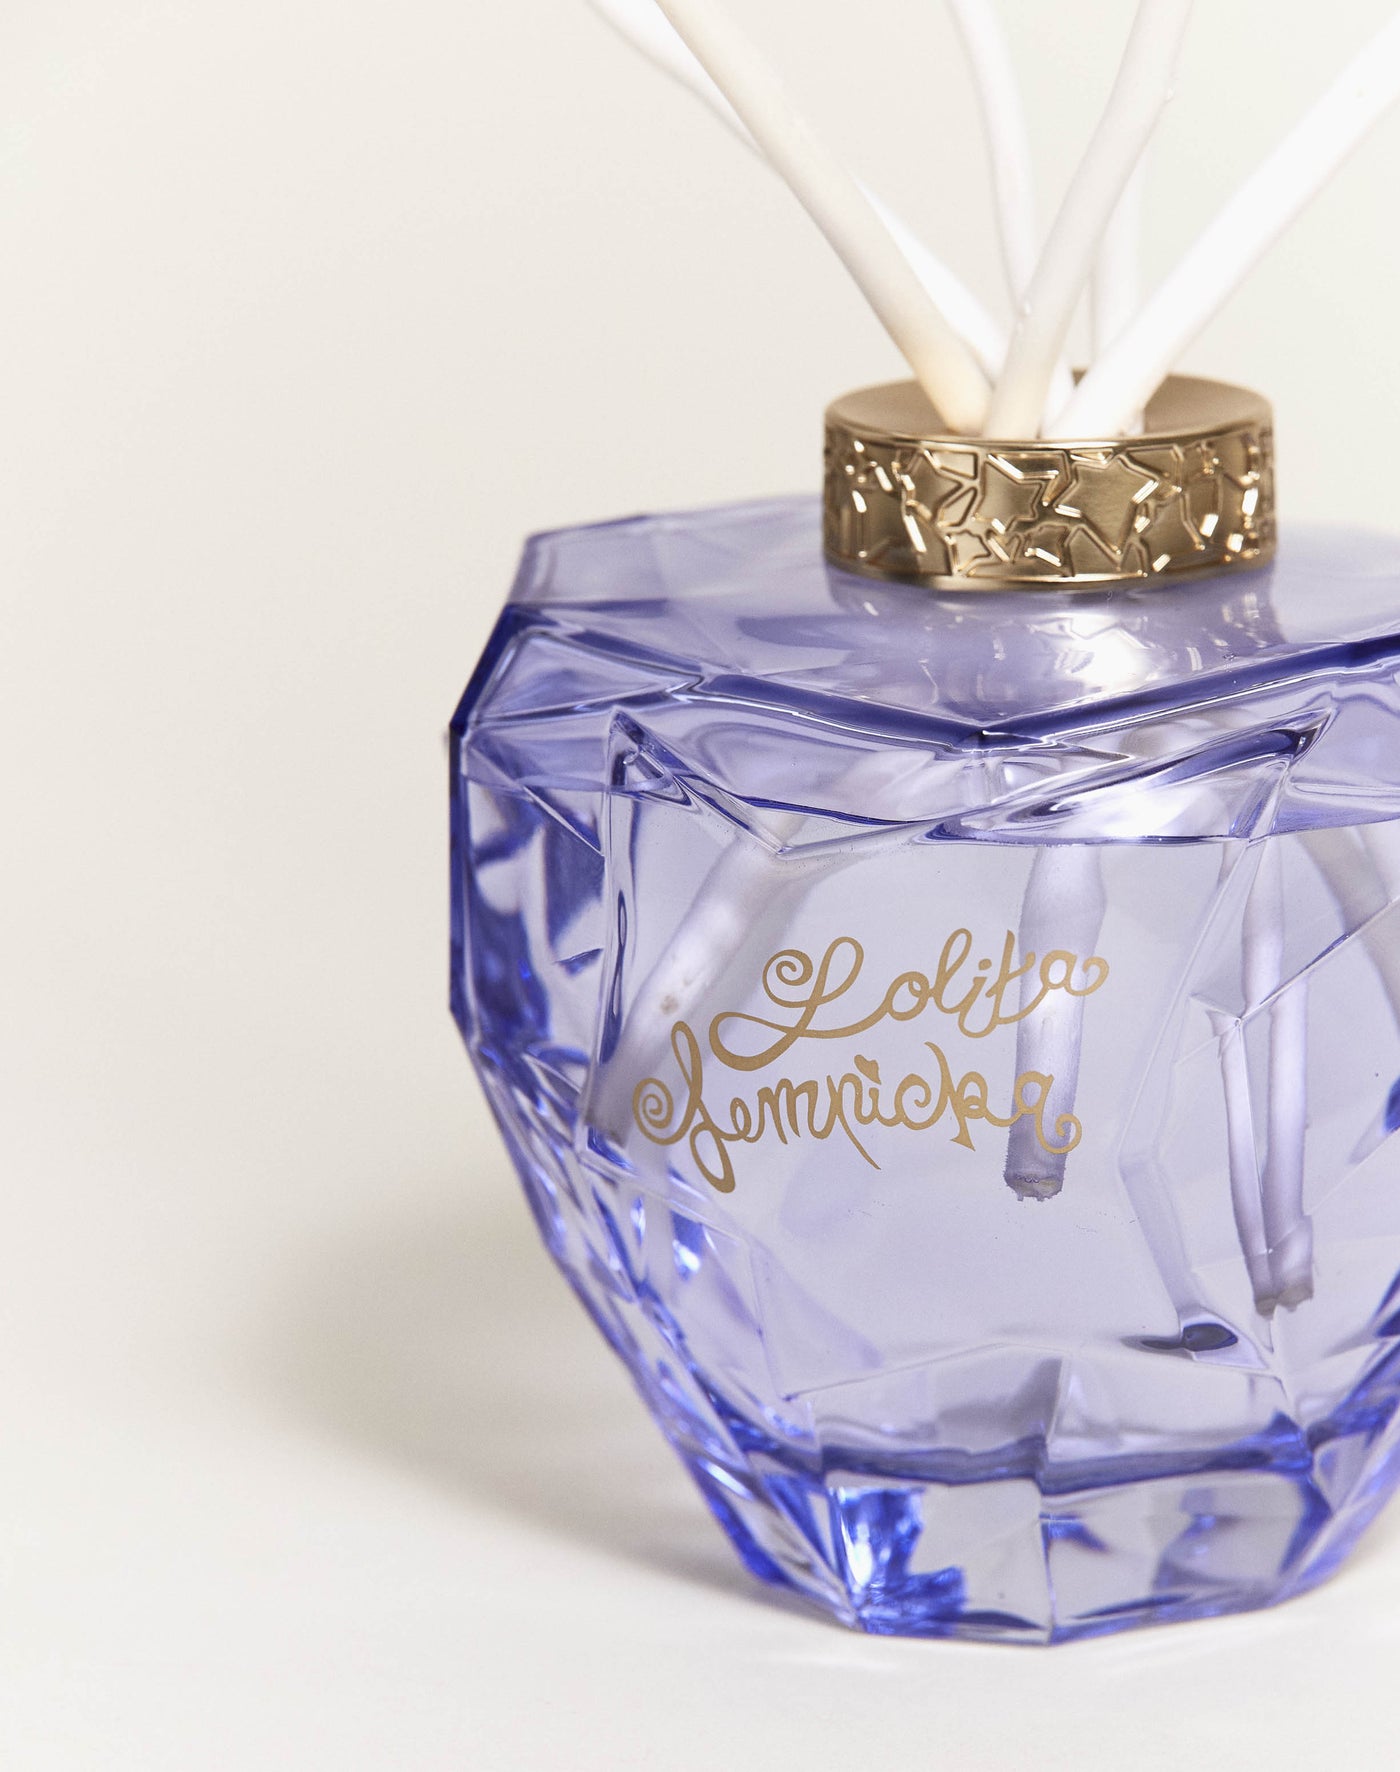 Violet Lolita Lempicka Premium Scented Bouquet